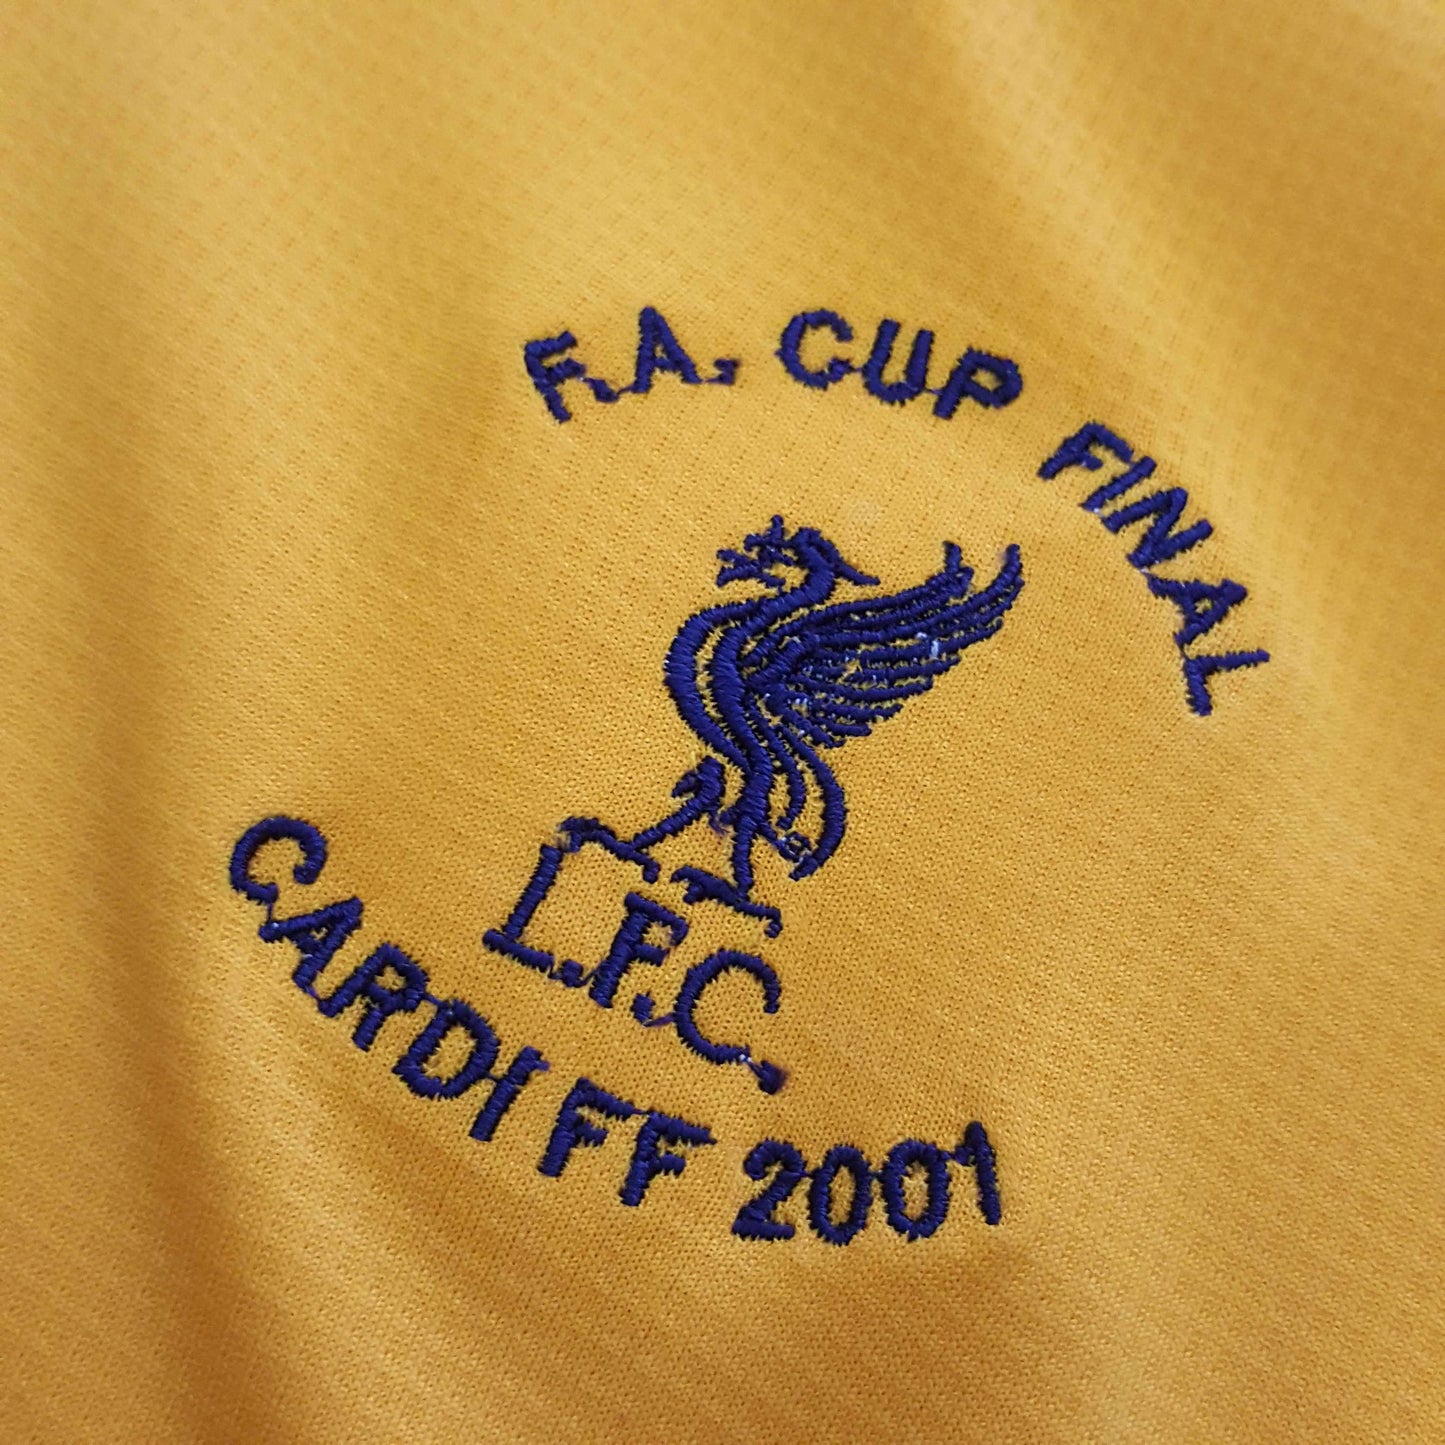 2001 Liverpool F.A Cup Final Cardiff - ClassicFootballJersey